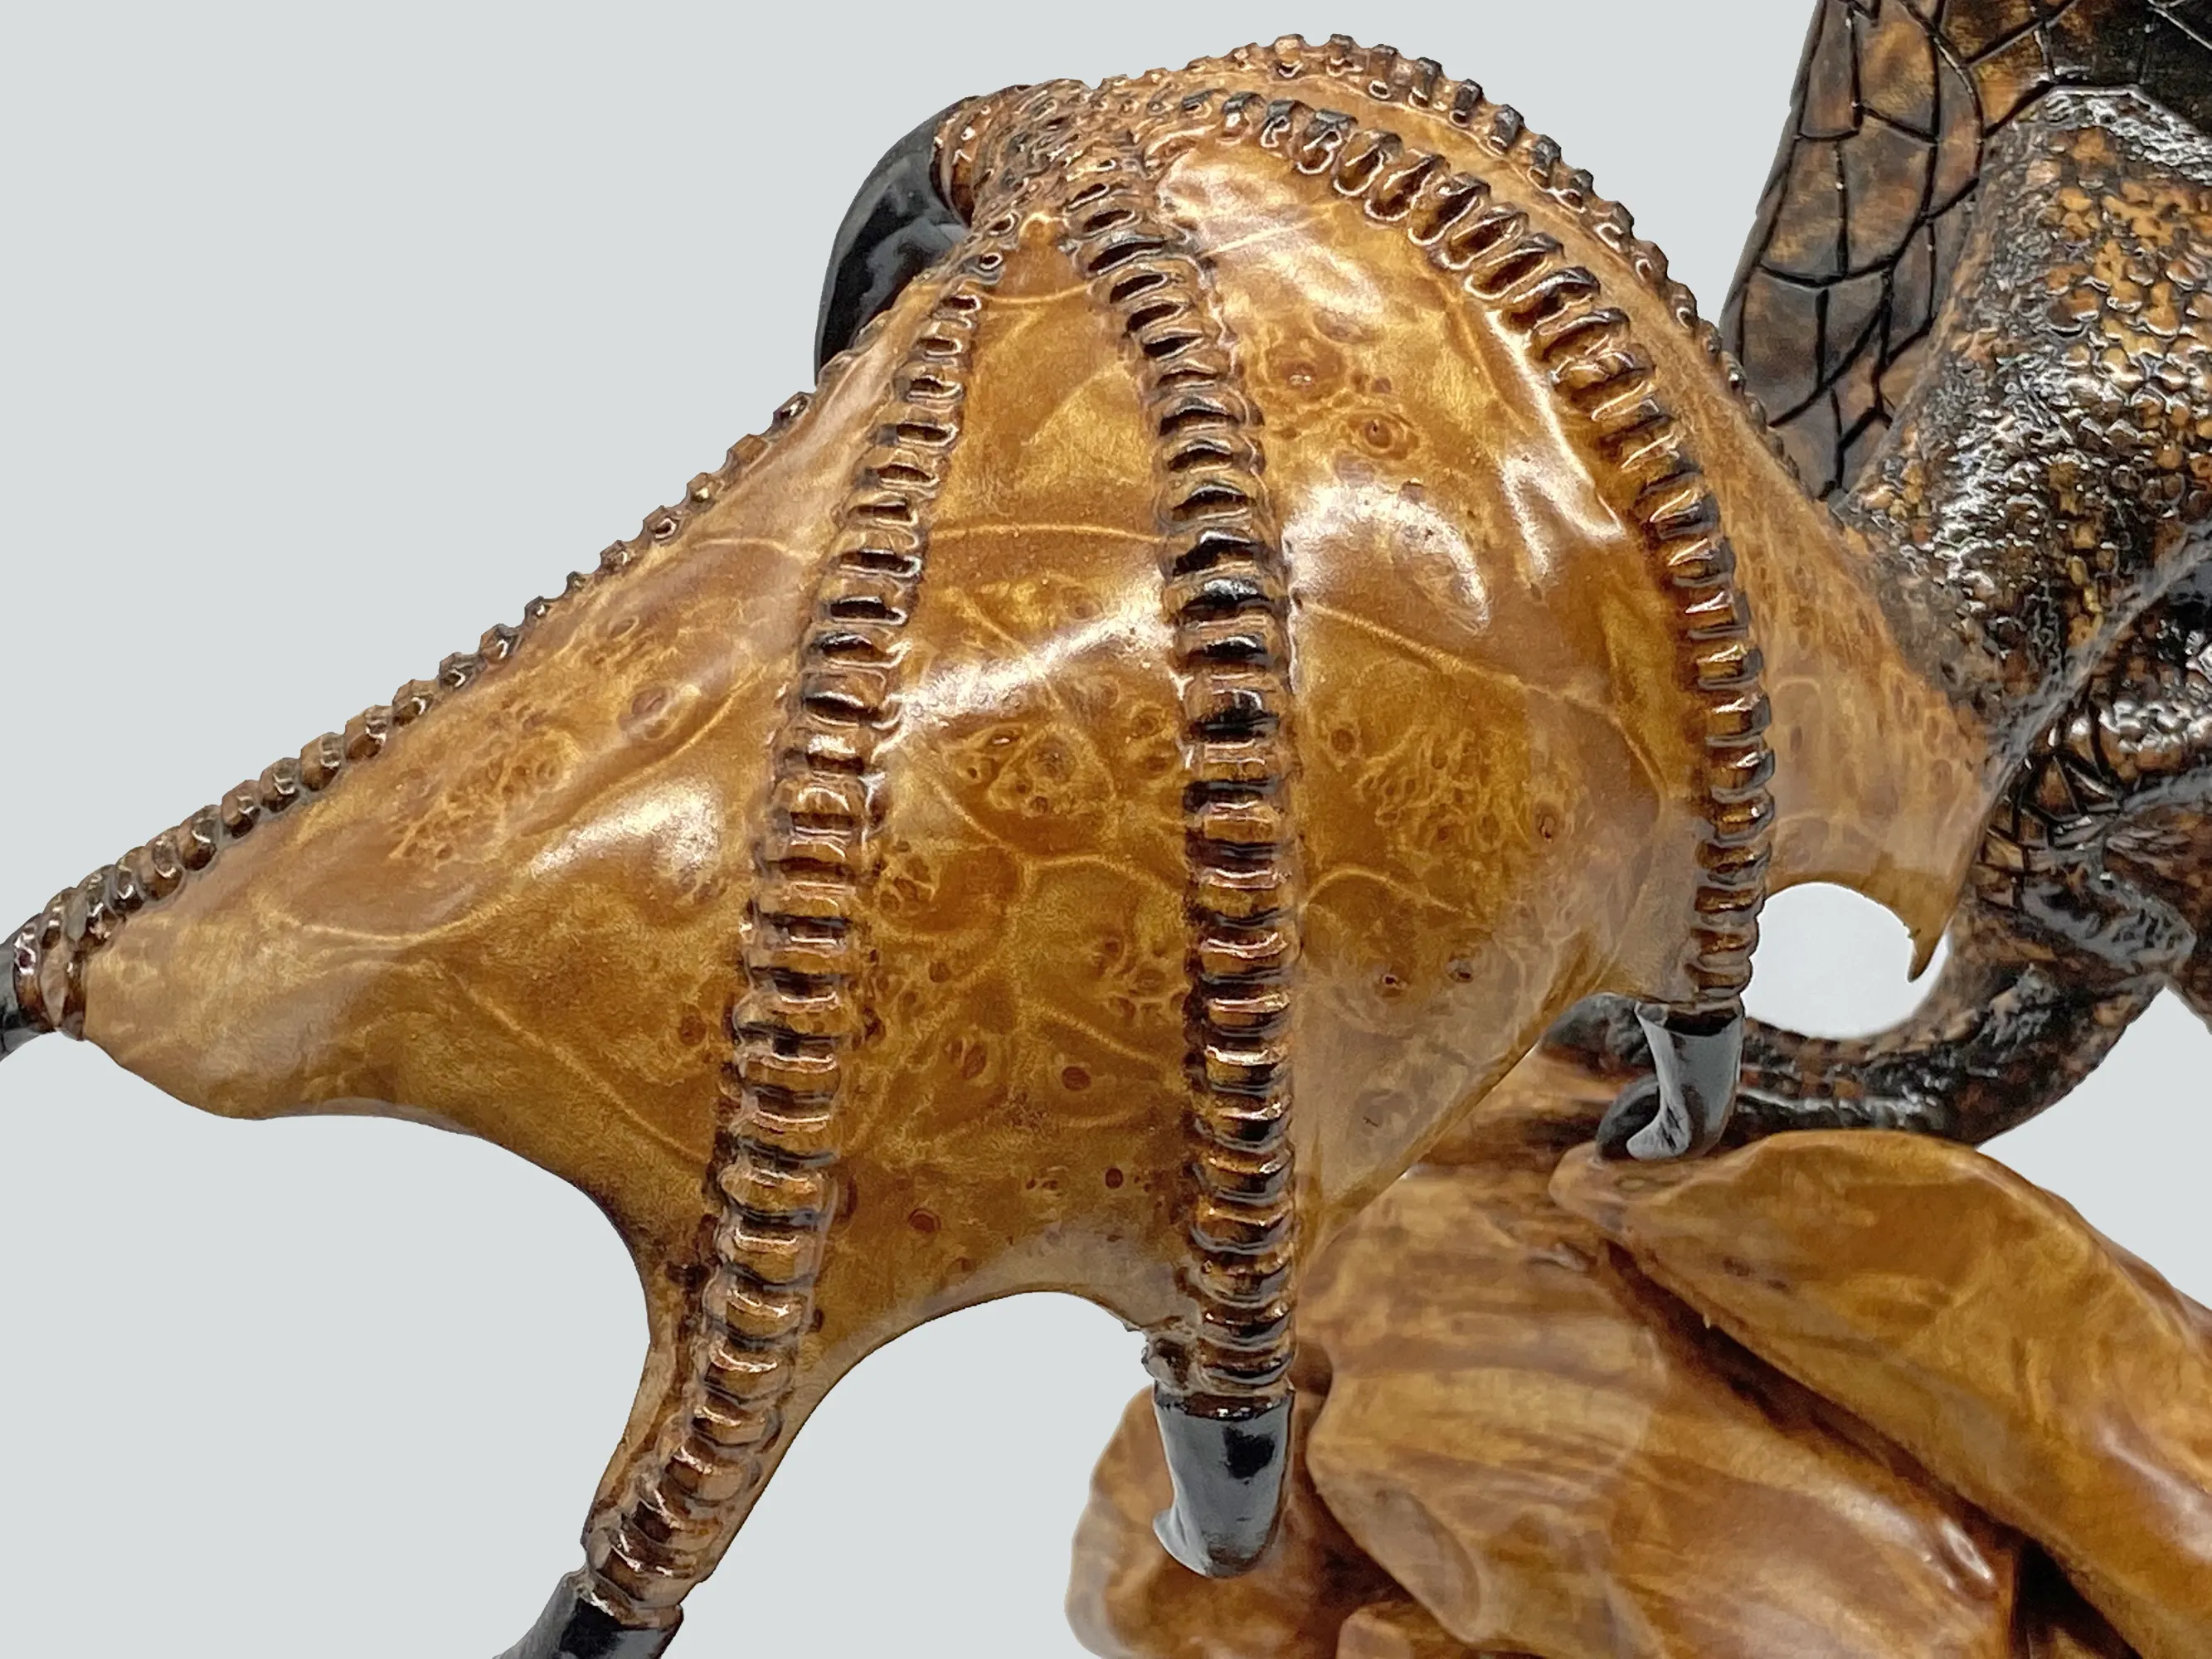 Dragon woodcarving sculpture